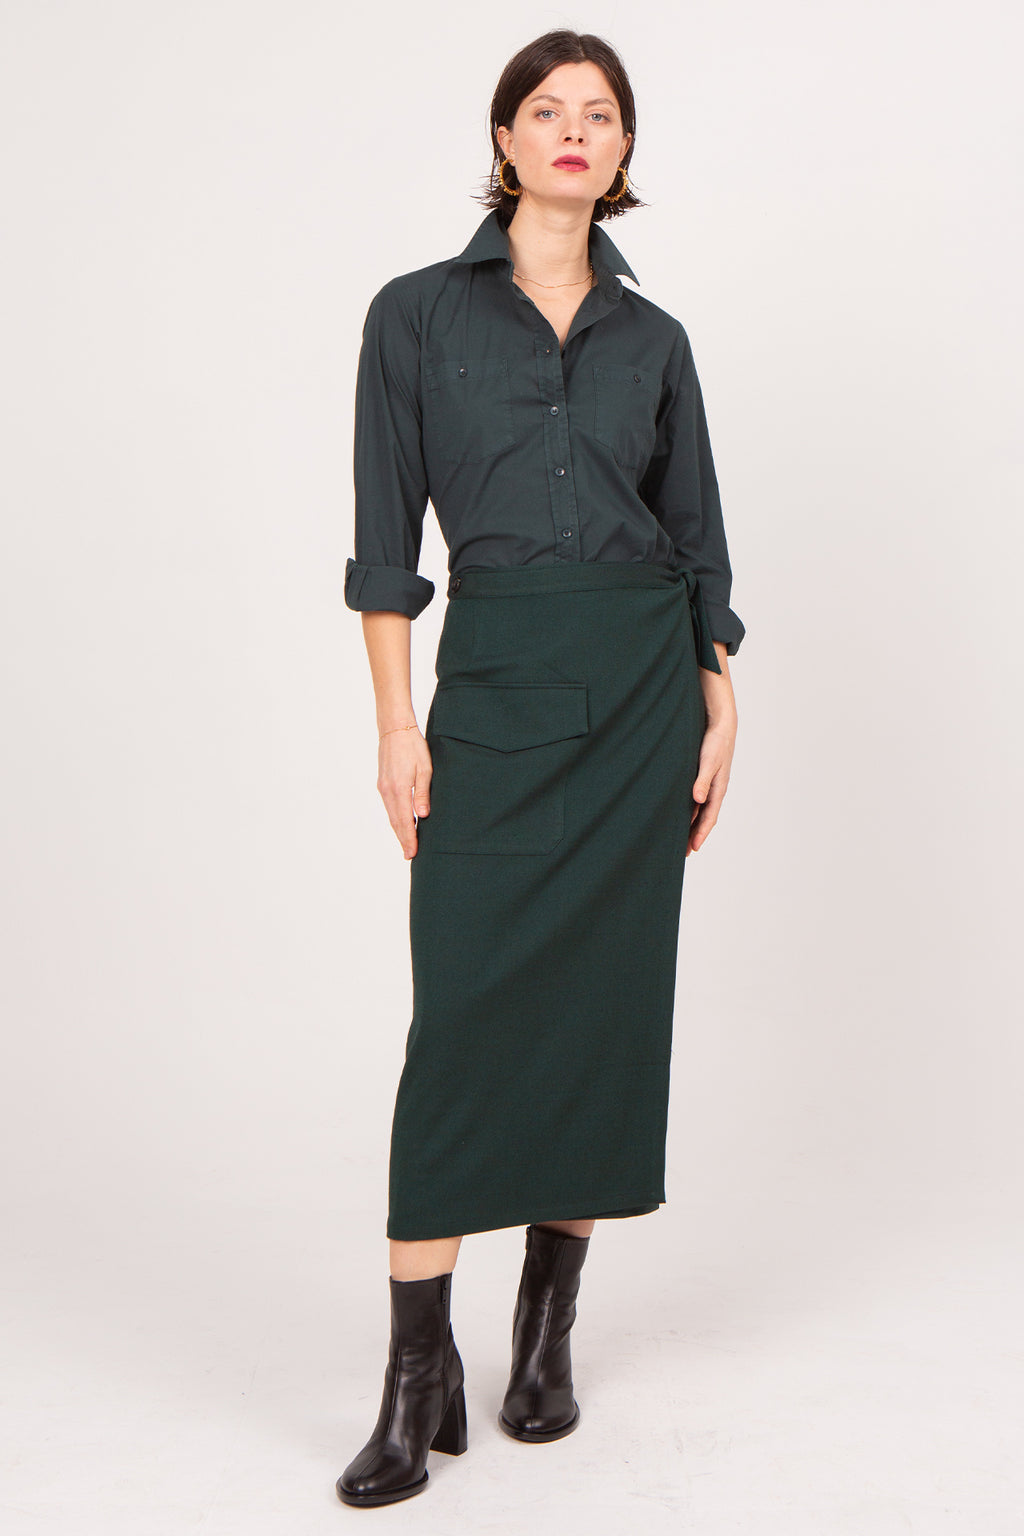 Zelia green wrap skirt